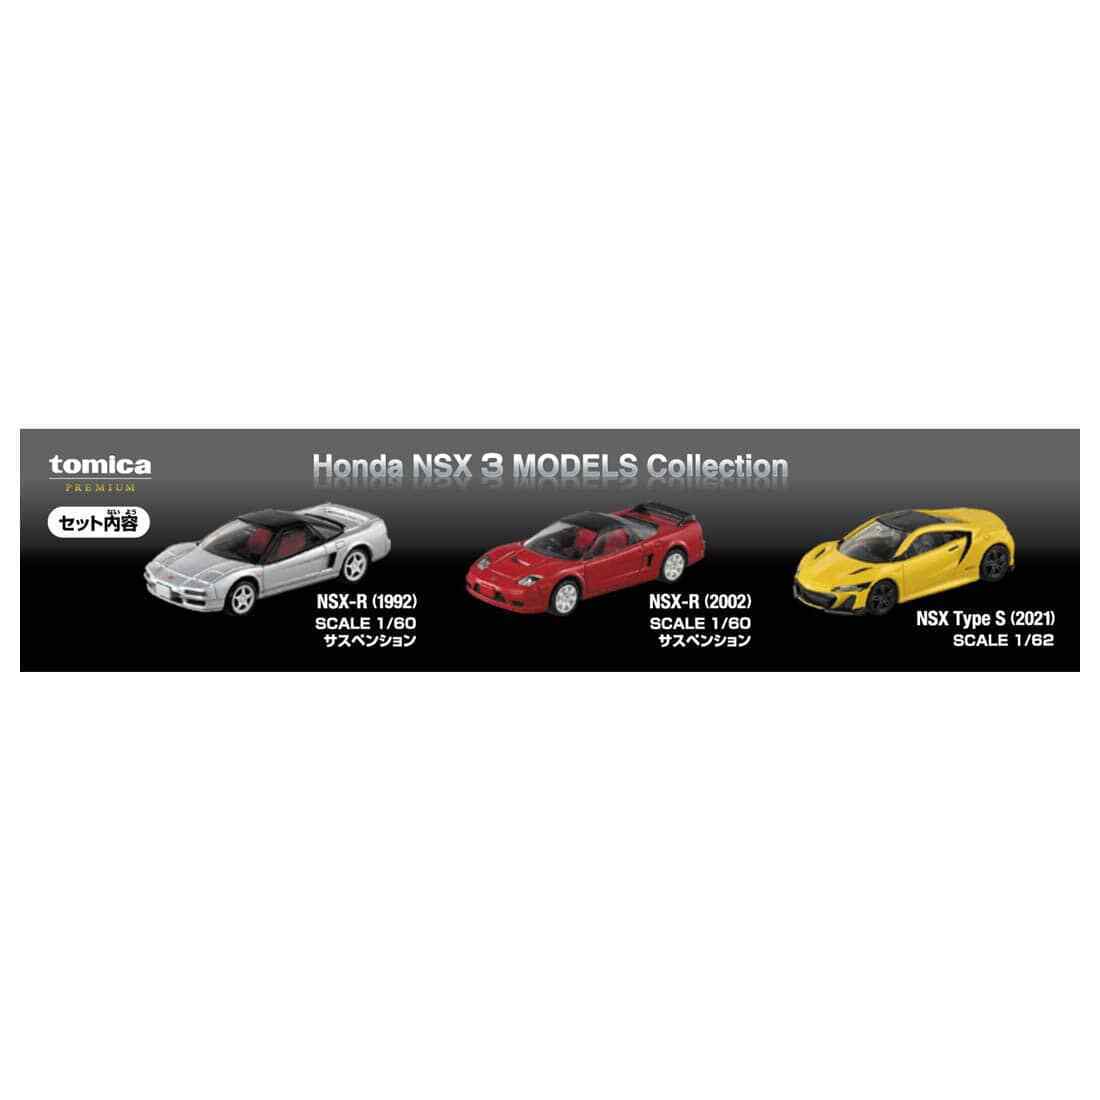 Tomica Premium Honda NSX 3 Models Collection Set